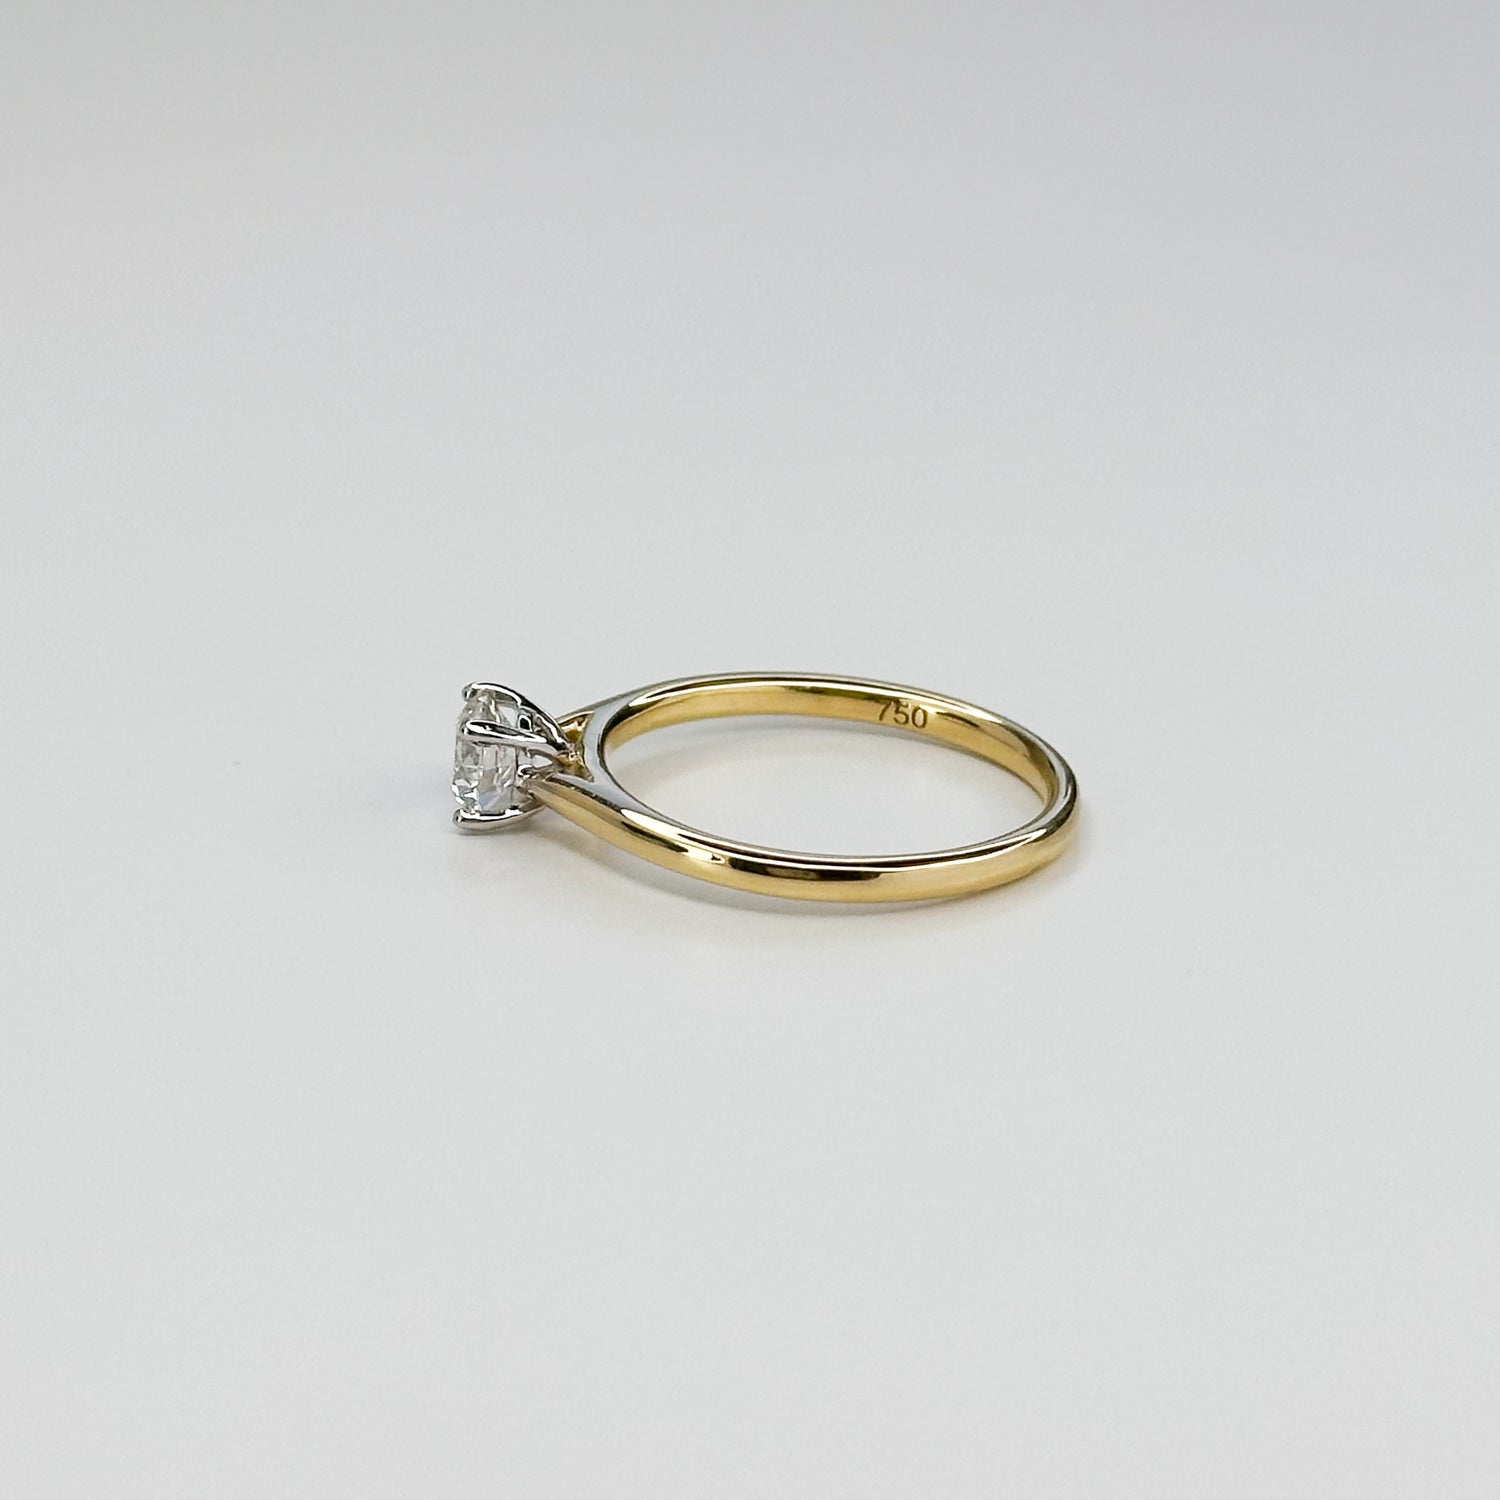 0.50ct GIA Diamond Ring in Yellow Gold